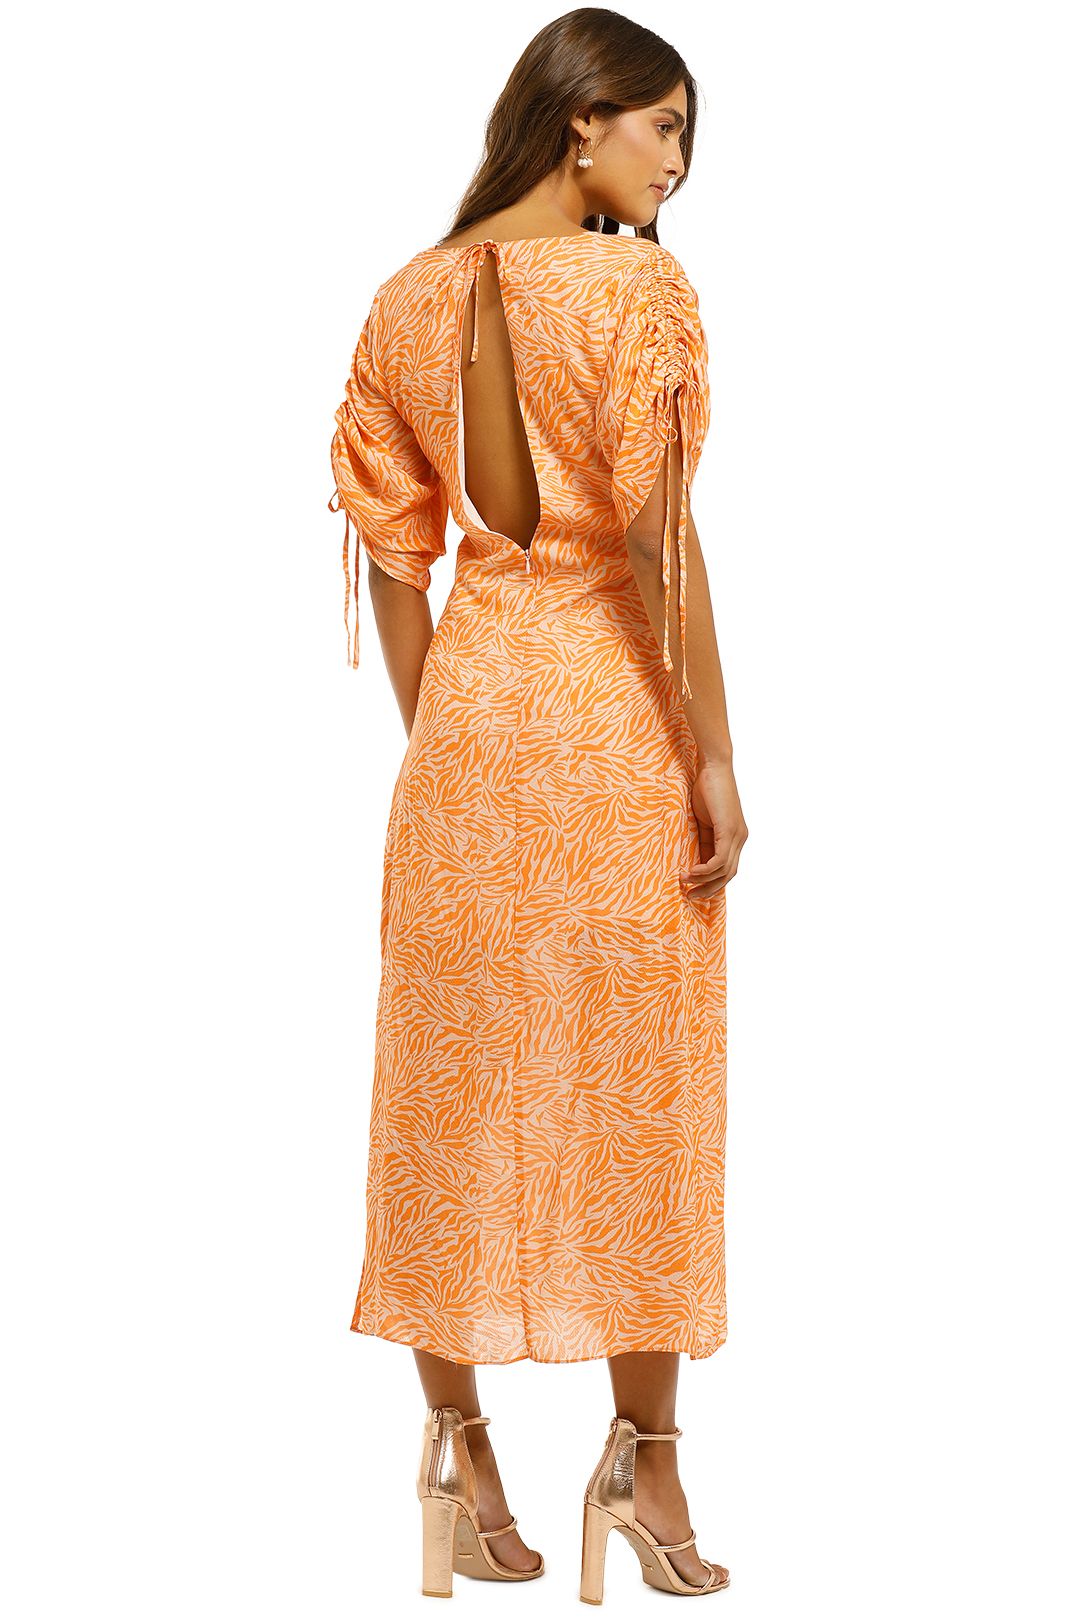 Suboo-Sienna-Wrapped-Dress-Orange-Back